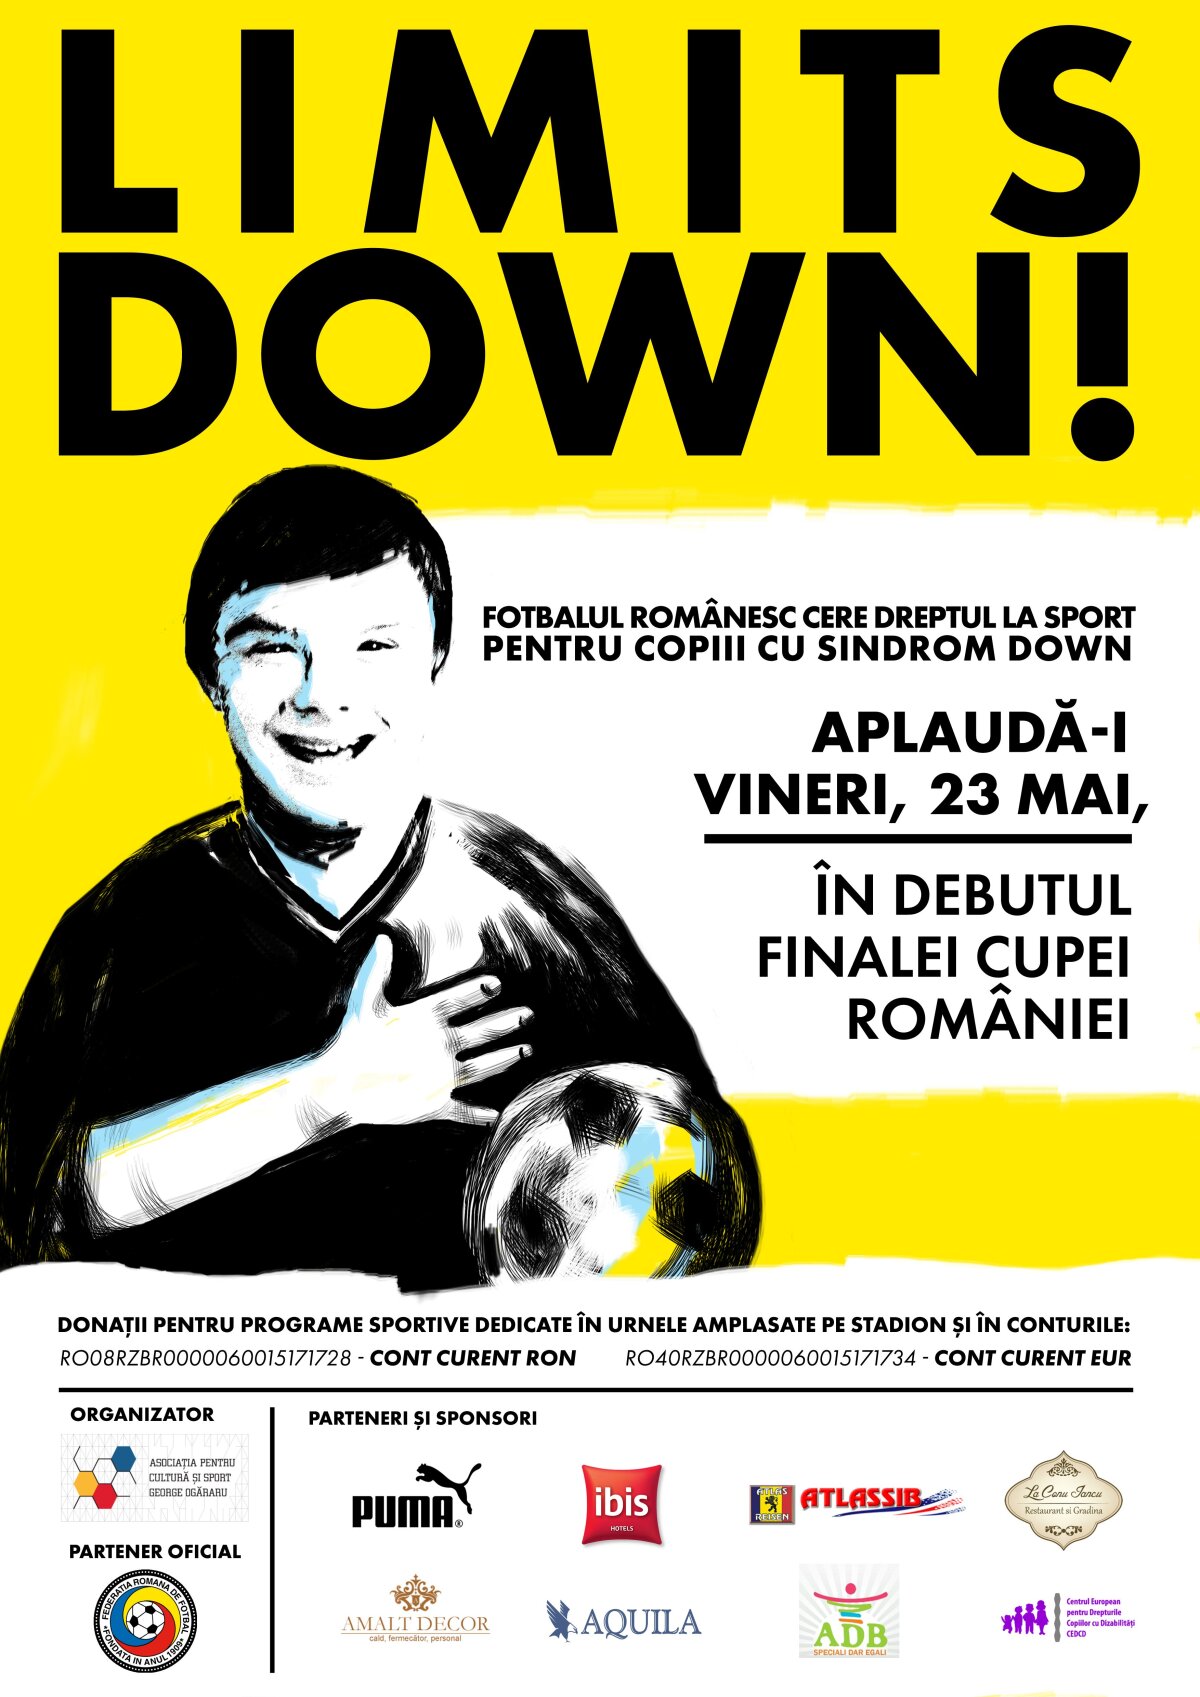 Finala Cupei României Steaua - Astra se va juca pentru copiii cu sindrom Down: "Limits Down"